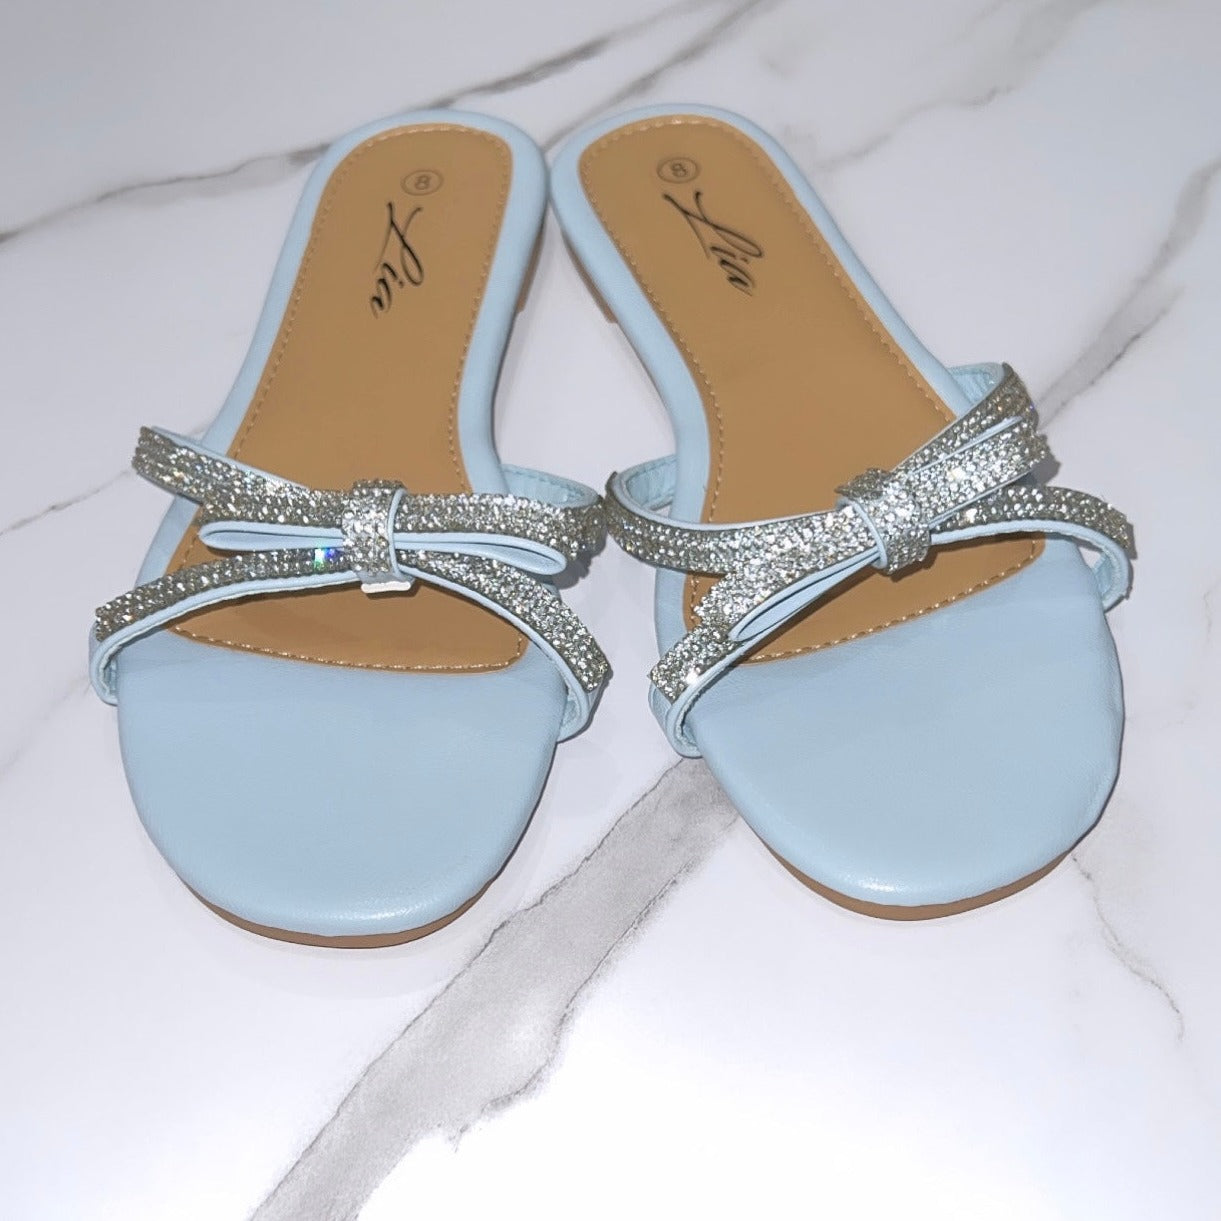 Krystal Rhinestone Sandals - Pastel Blue